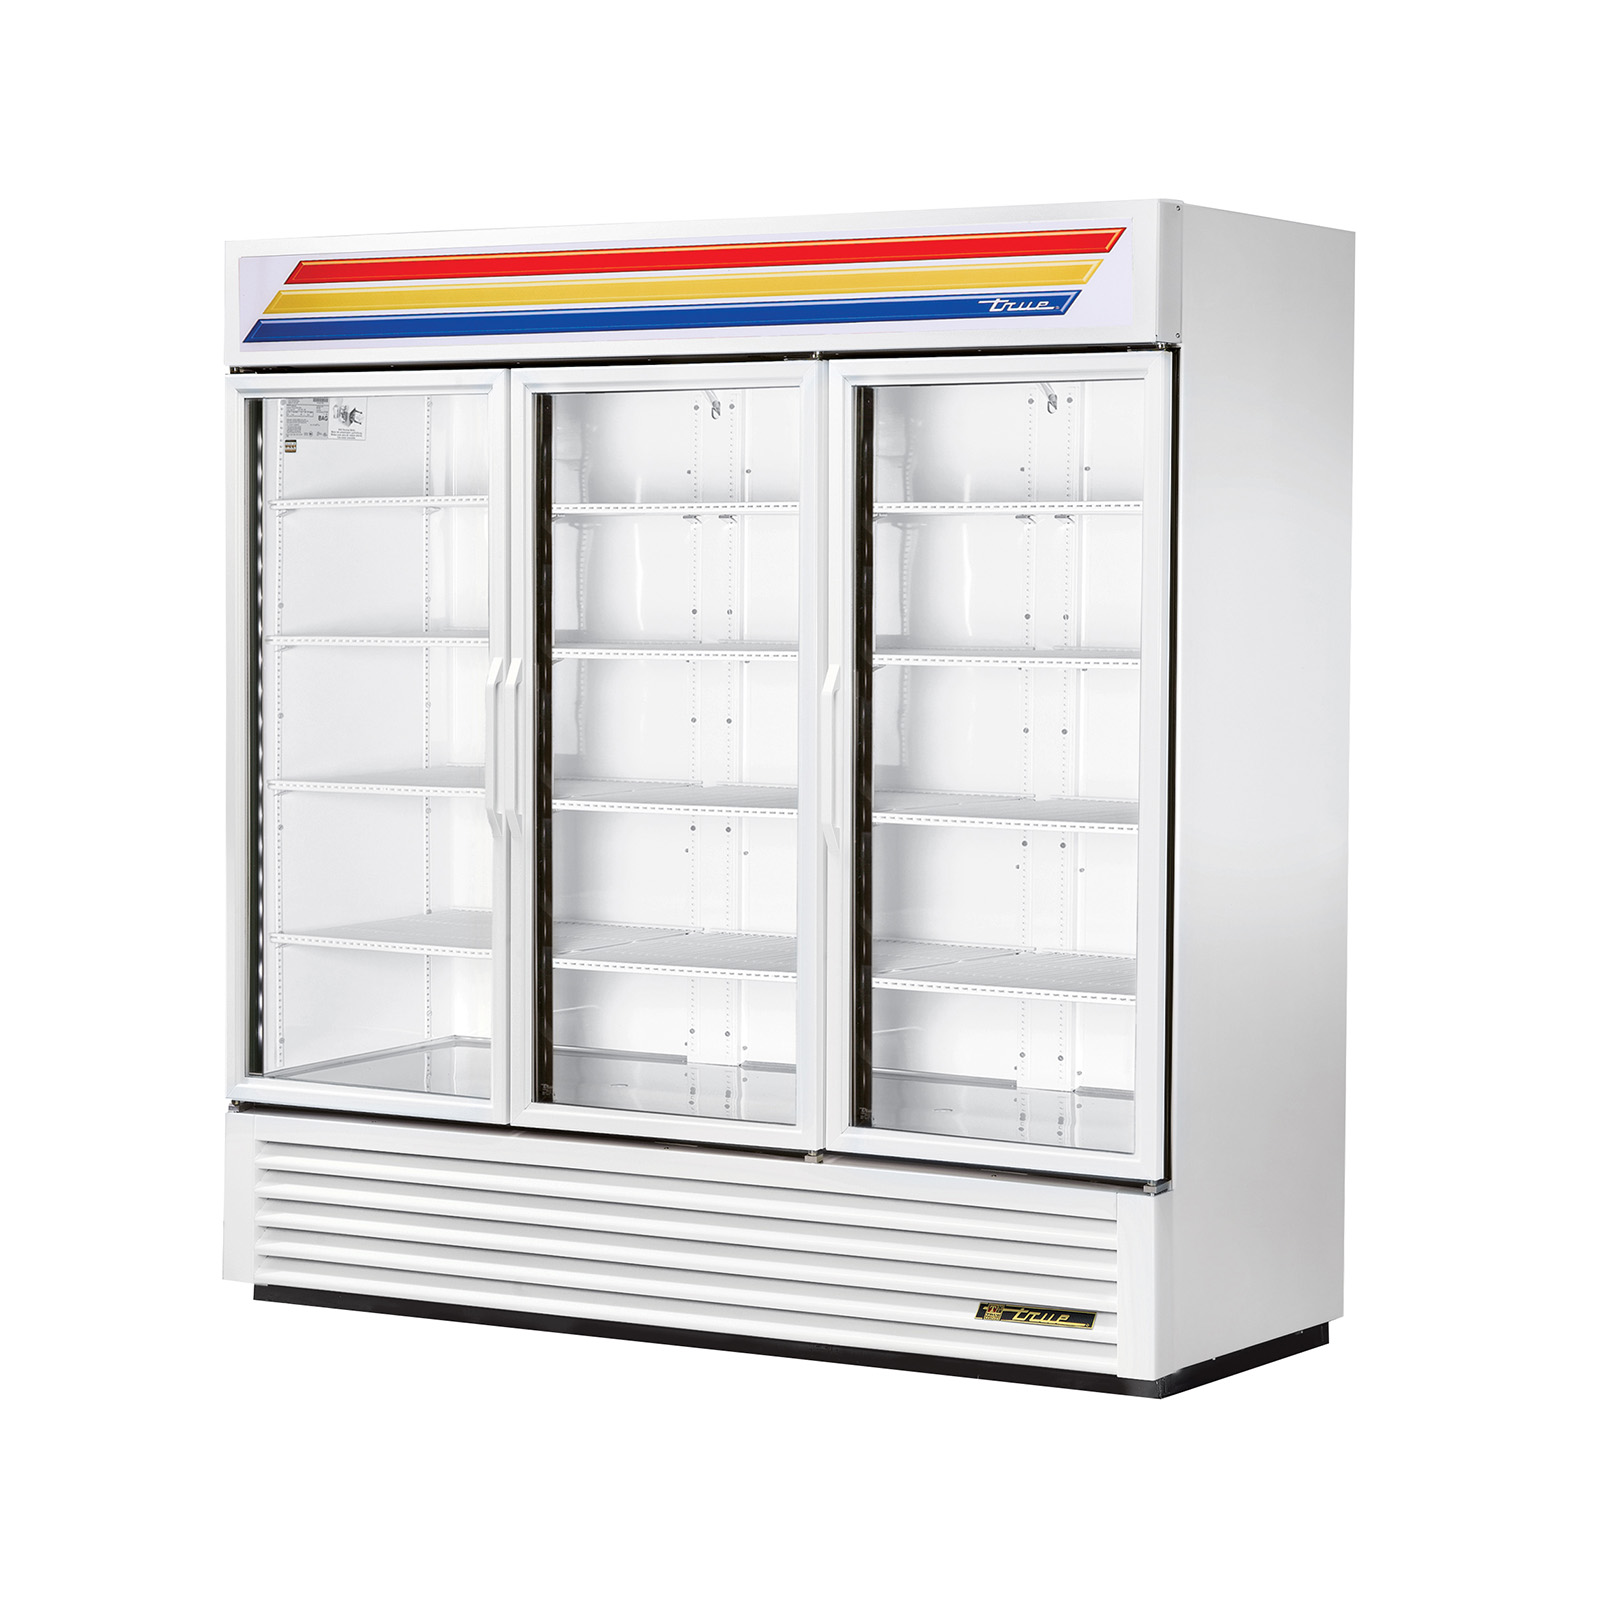 True Food Service Equipment GDM-72-LD WHT CVS Refrigerator, Merchandiser